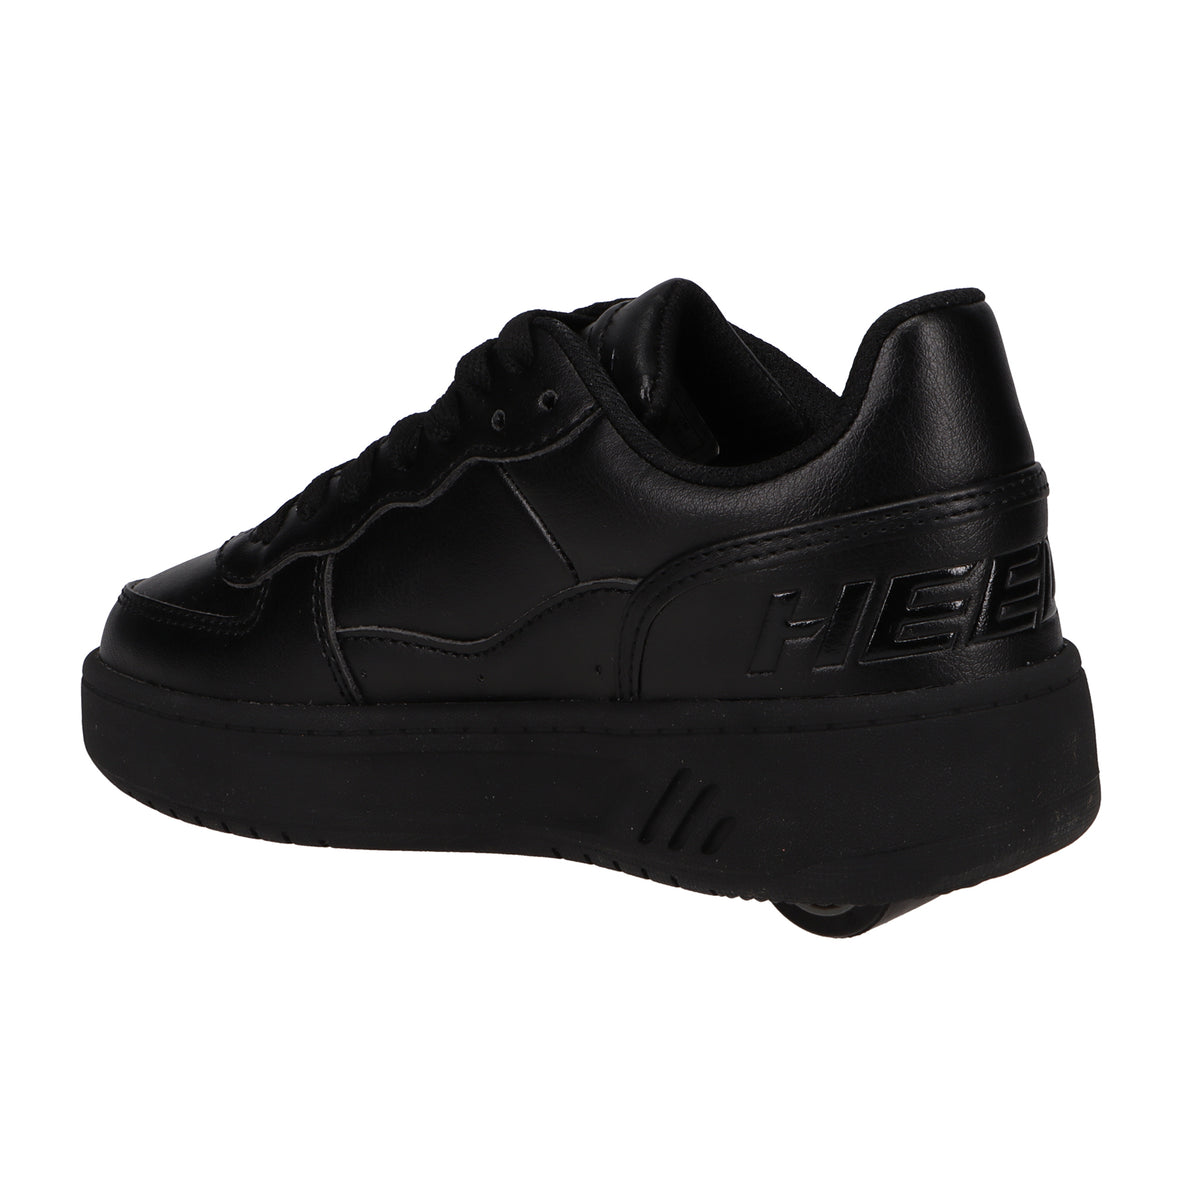 Heelys Canada  Heelys Plug Kit - Black (2 Pack) – The John Forsyth Shirt  Co Inc. 8300 Parkhill Drive, Unit 3 Milton, ON L9T 5V7 / Heelys Shoes Canada